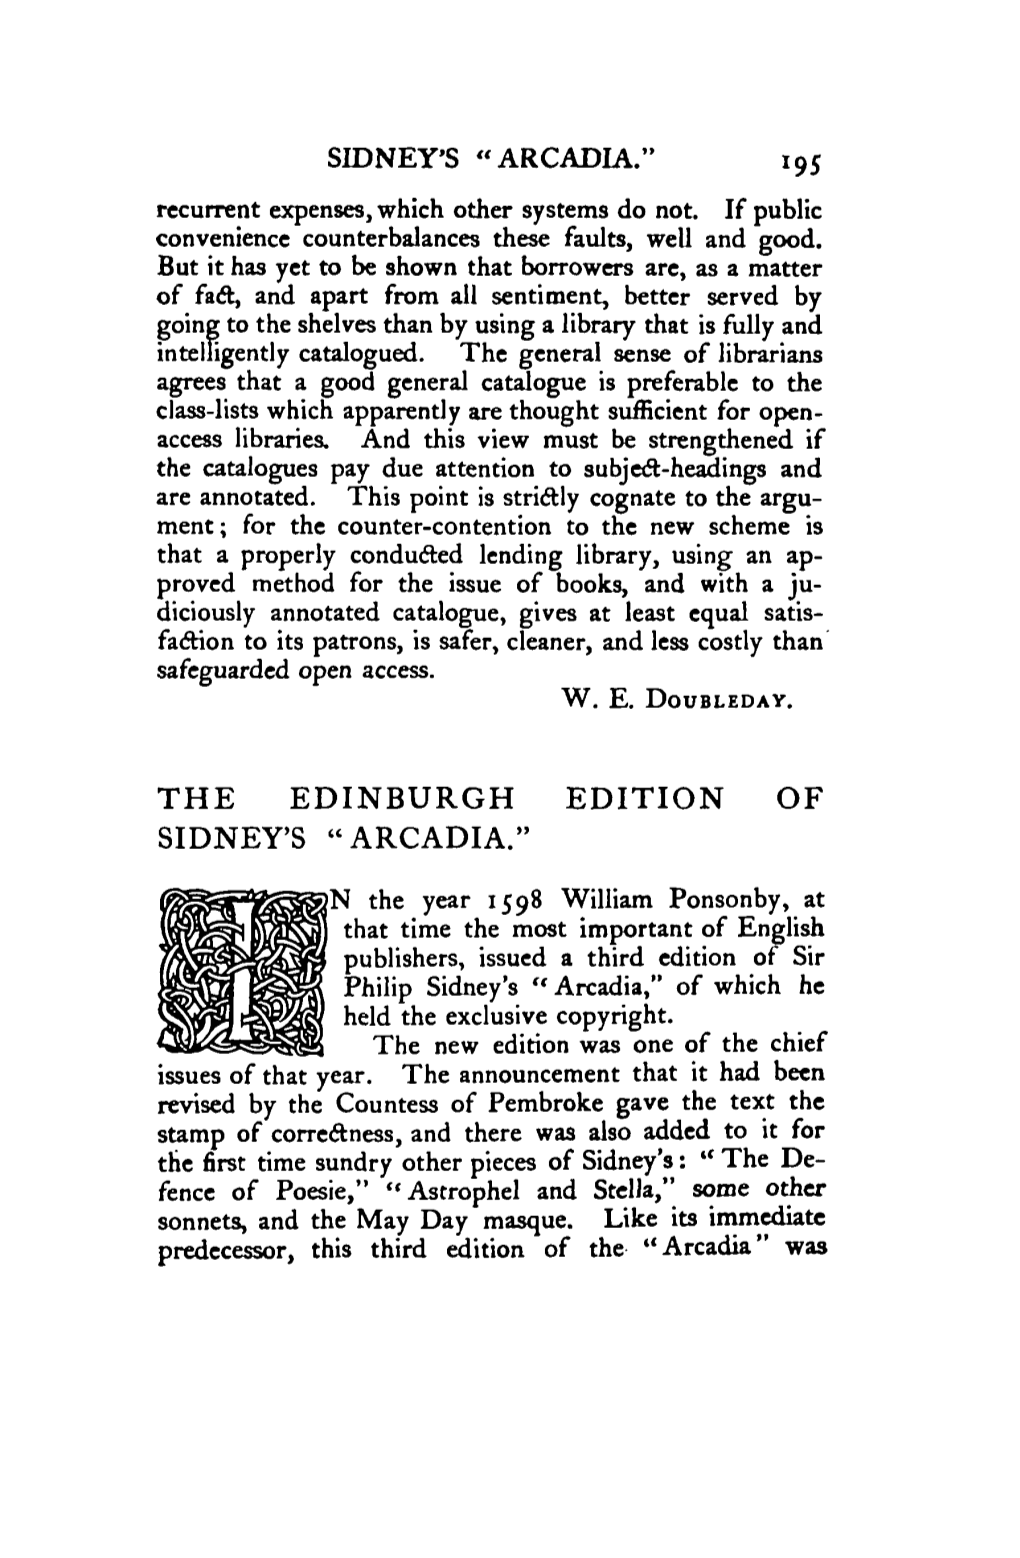 The Edinburgh Edition of Sidney's "Arcadia."